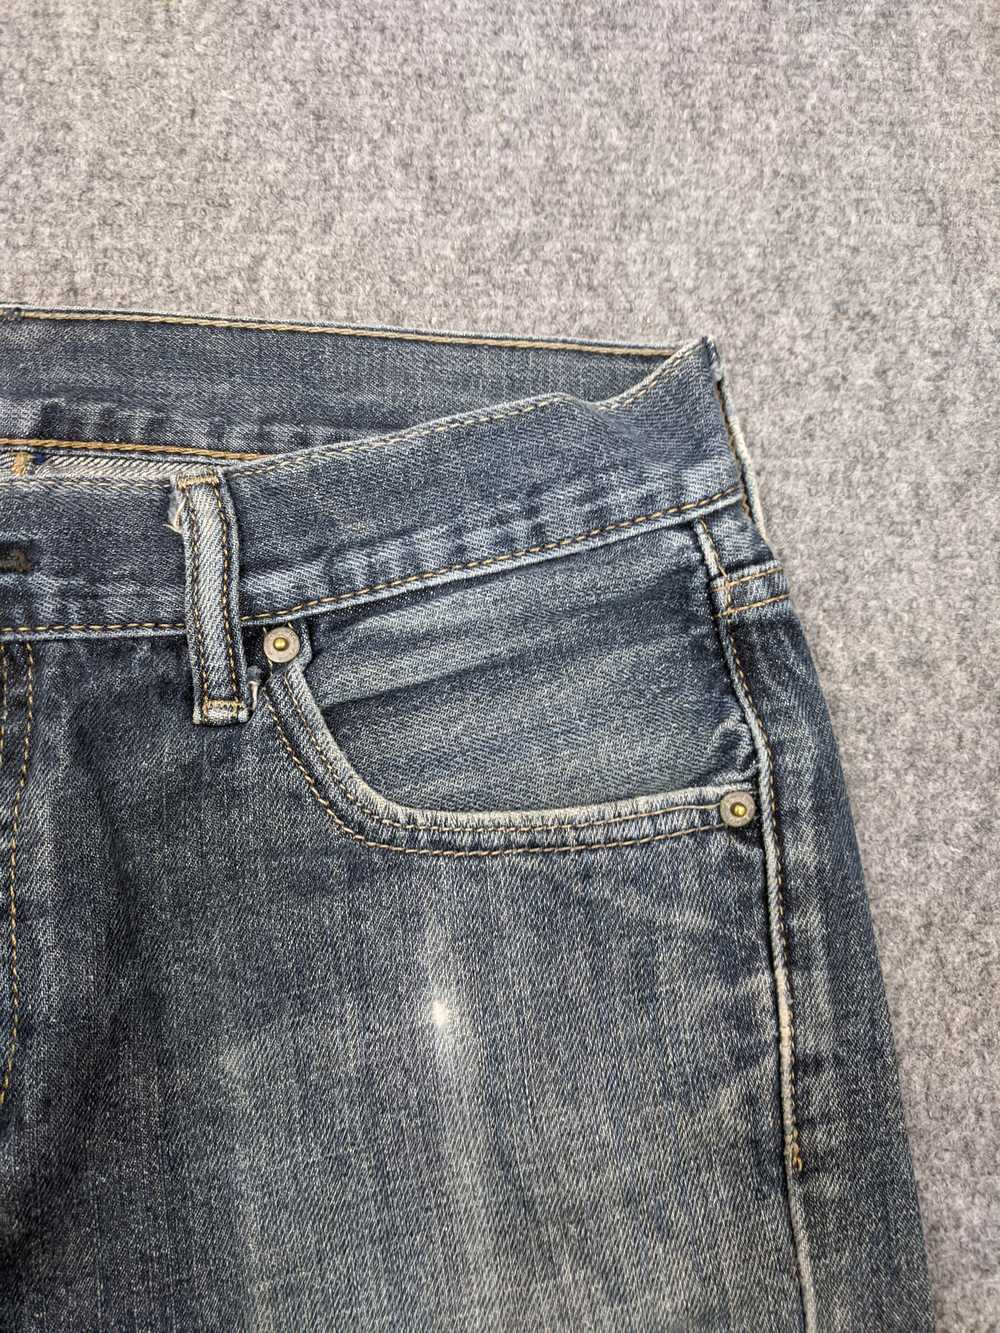 Vintage - Vintage Levis 527 Jeans - image 5